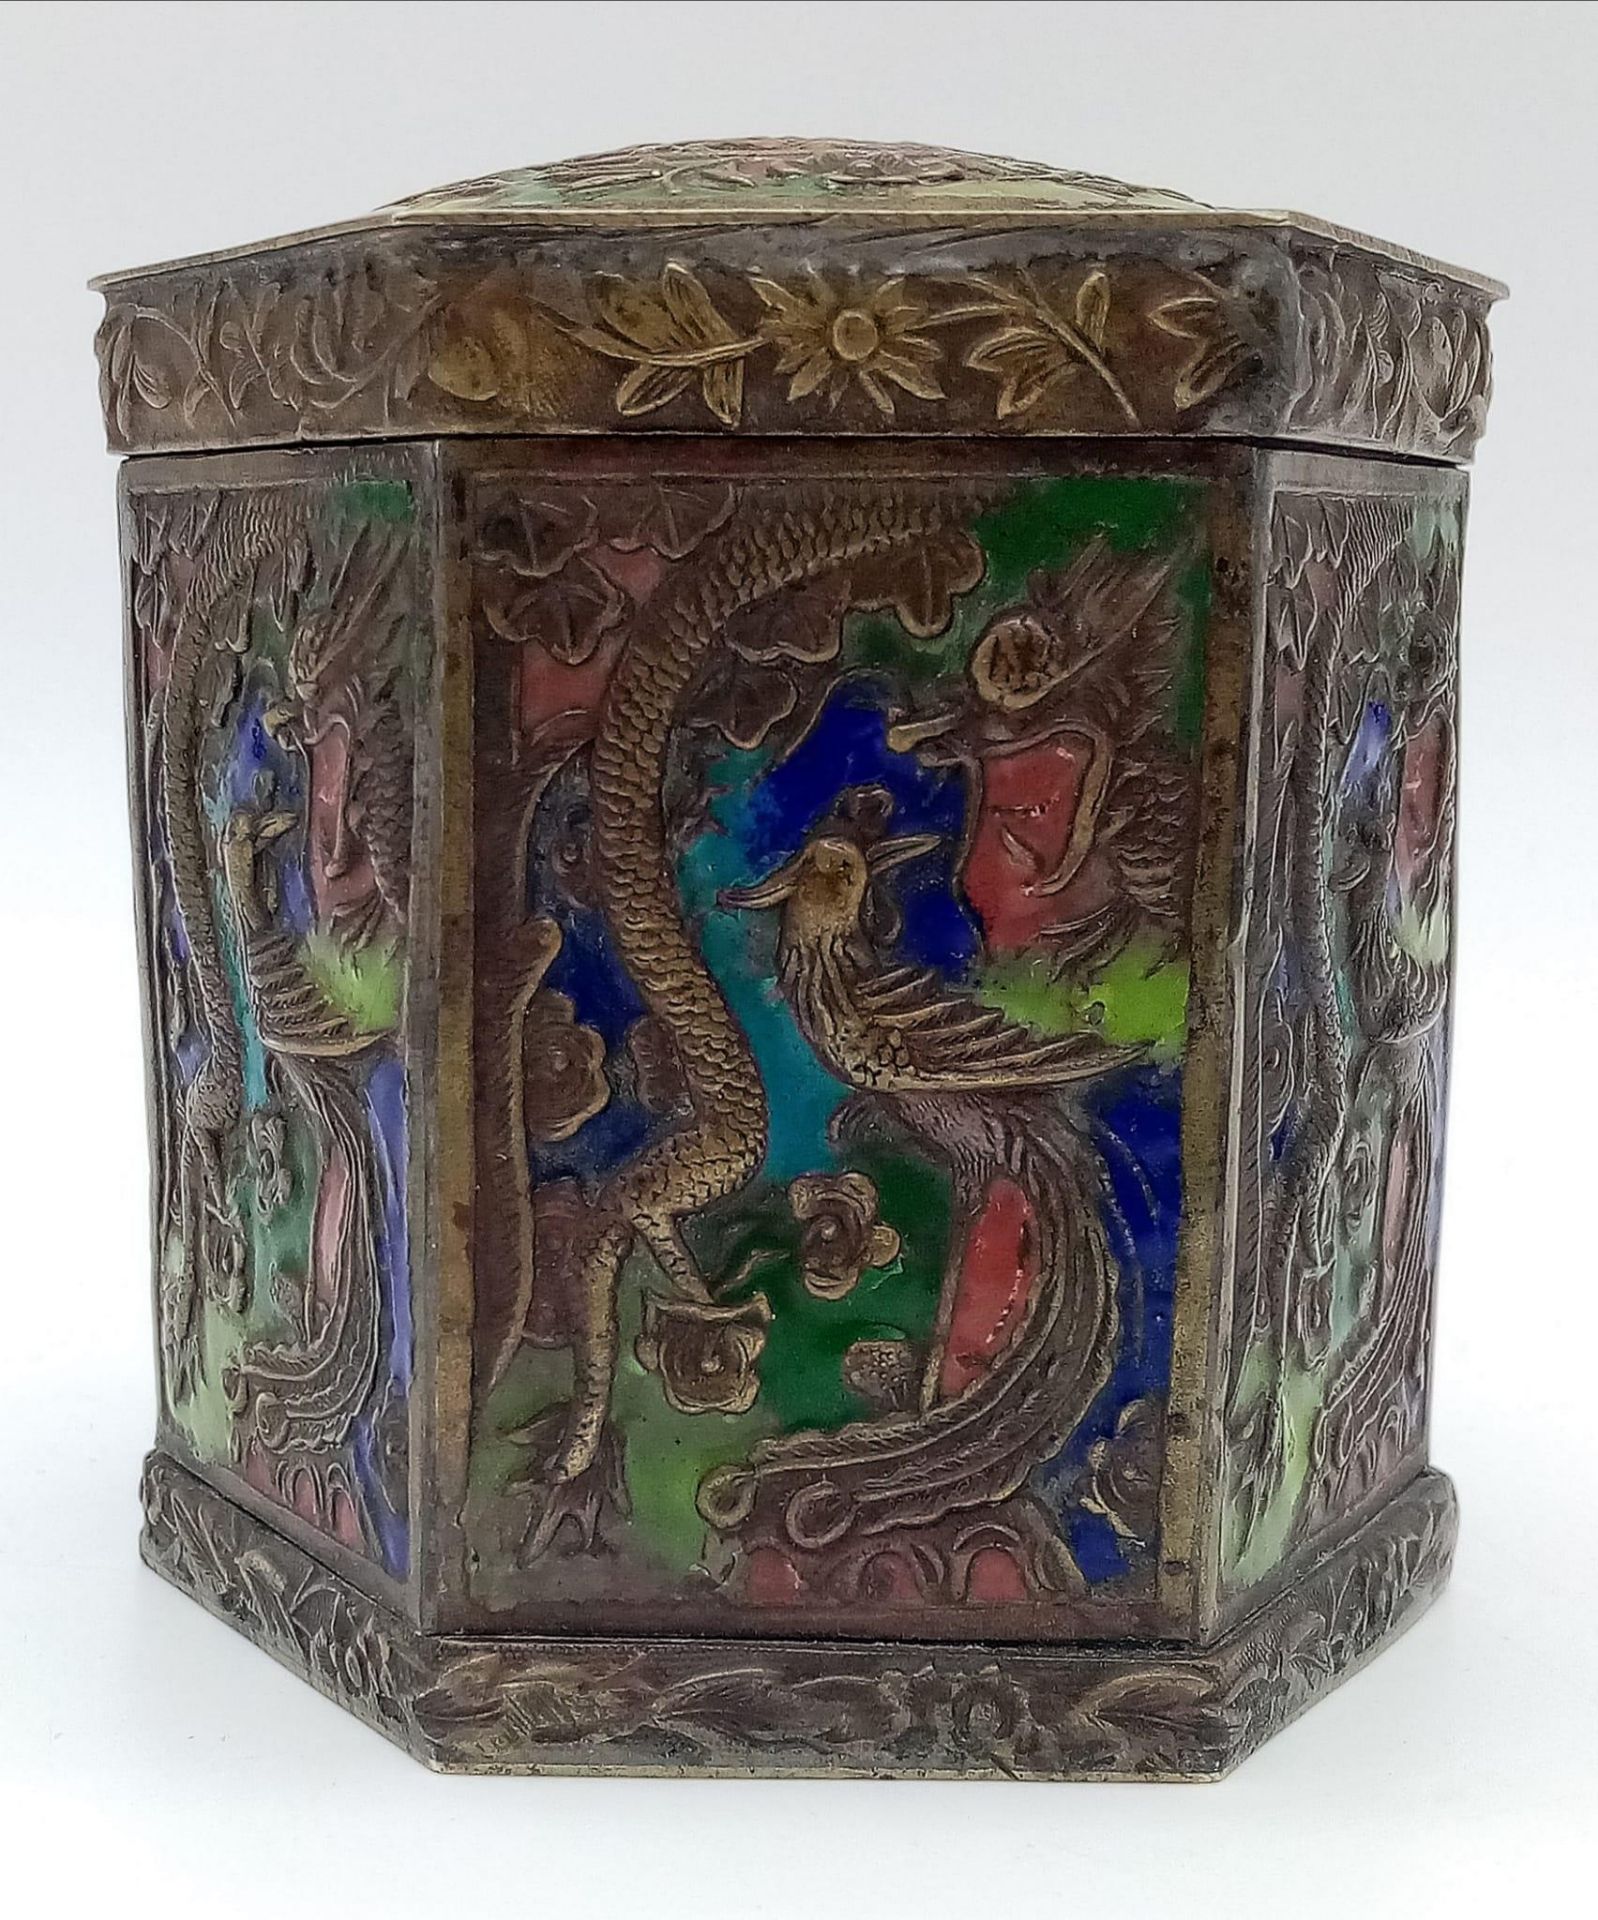 A beautiful antique Chinese Bronze Tea Caddy. Stunning enamel work incorporating Dragons & Phoenix